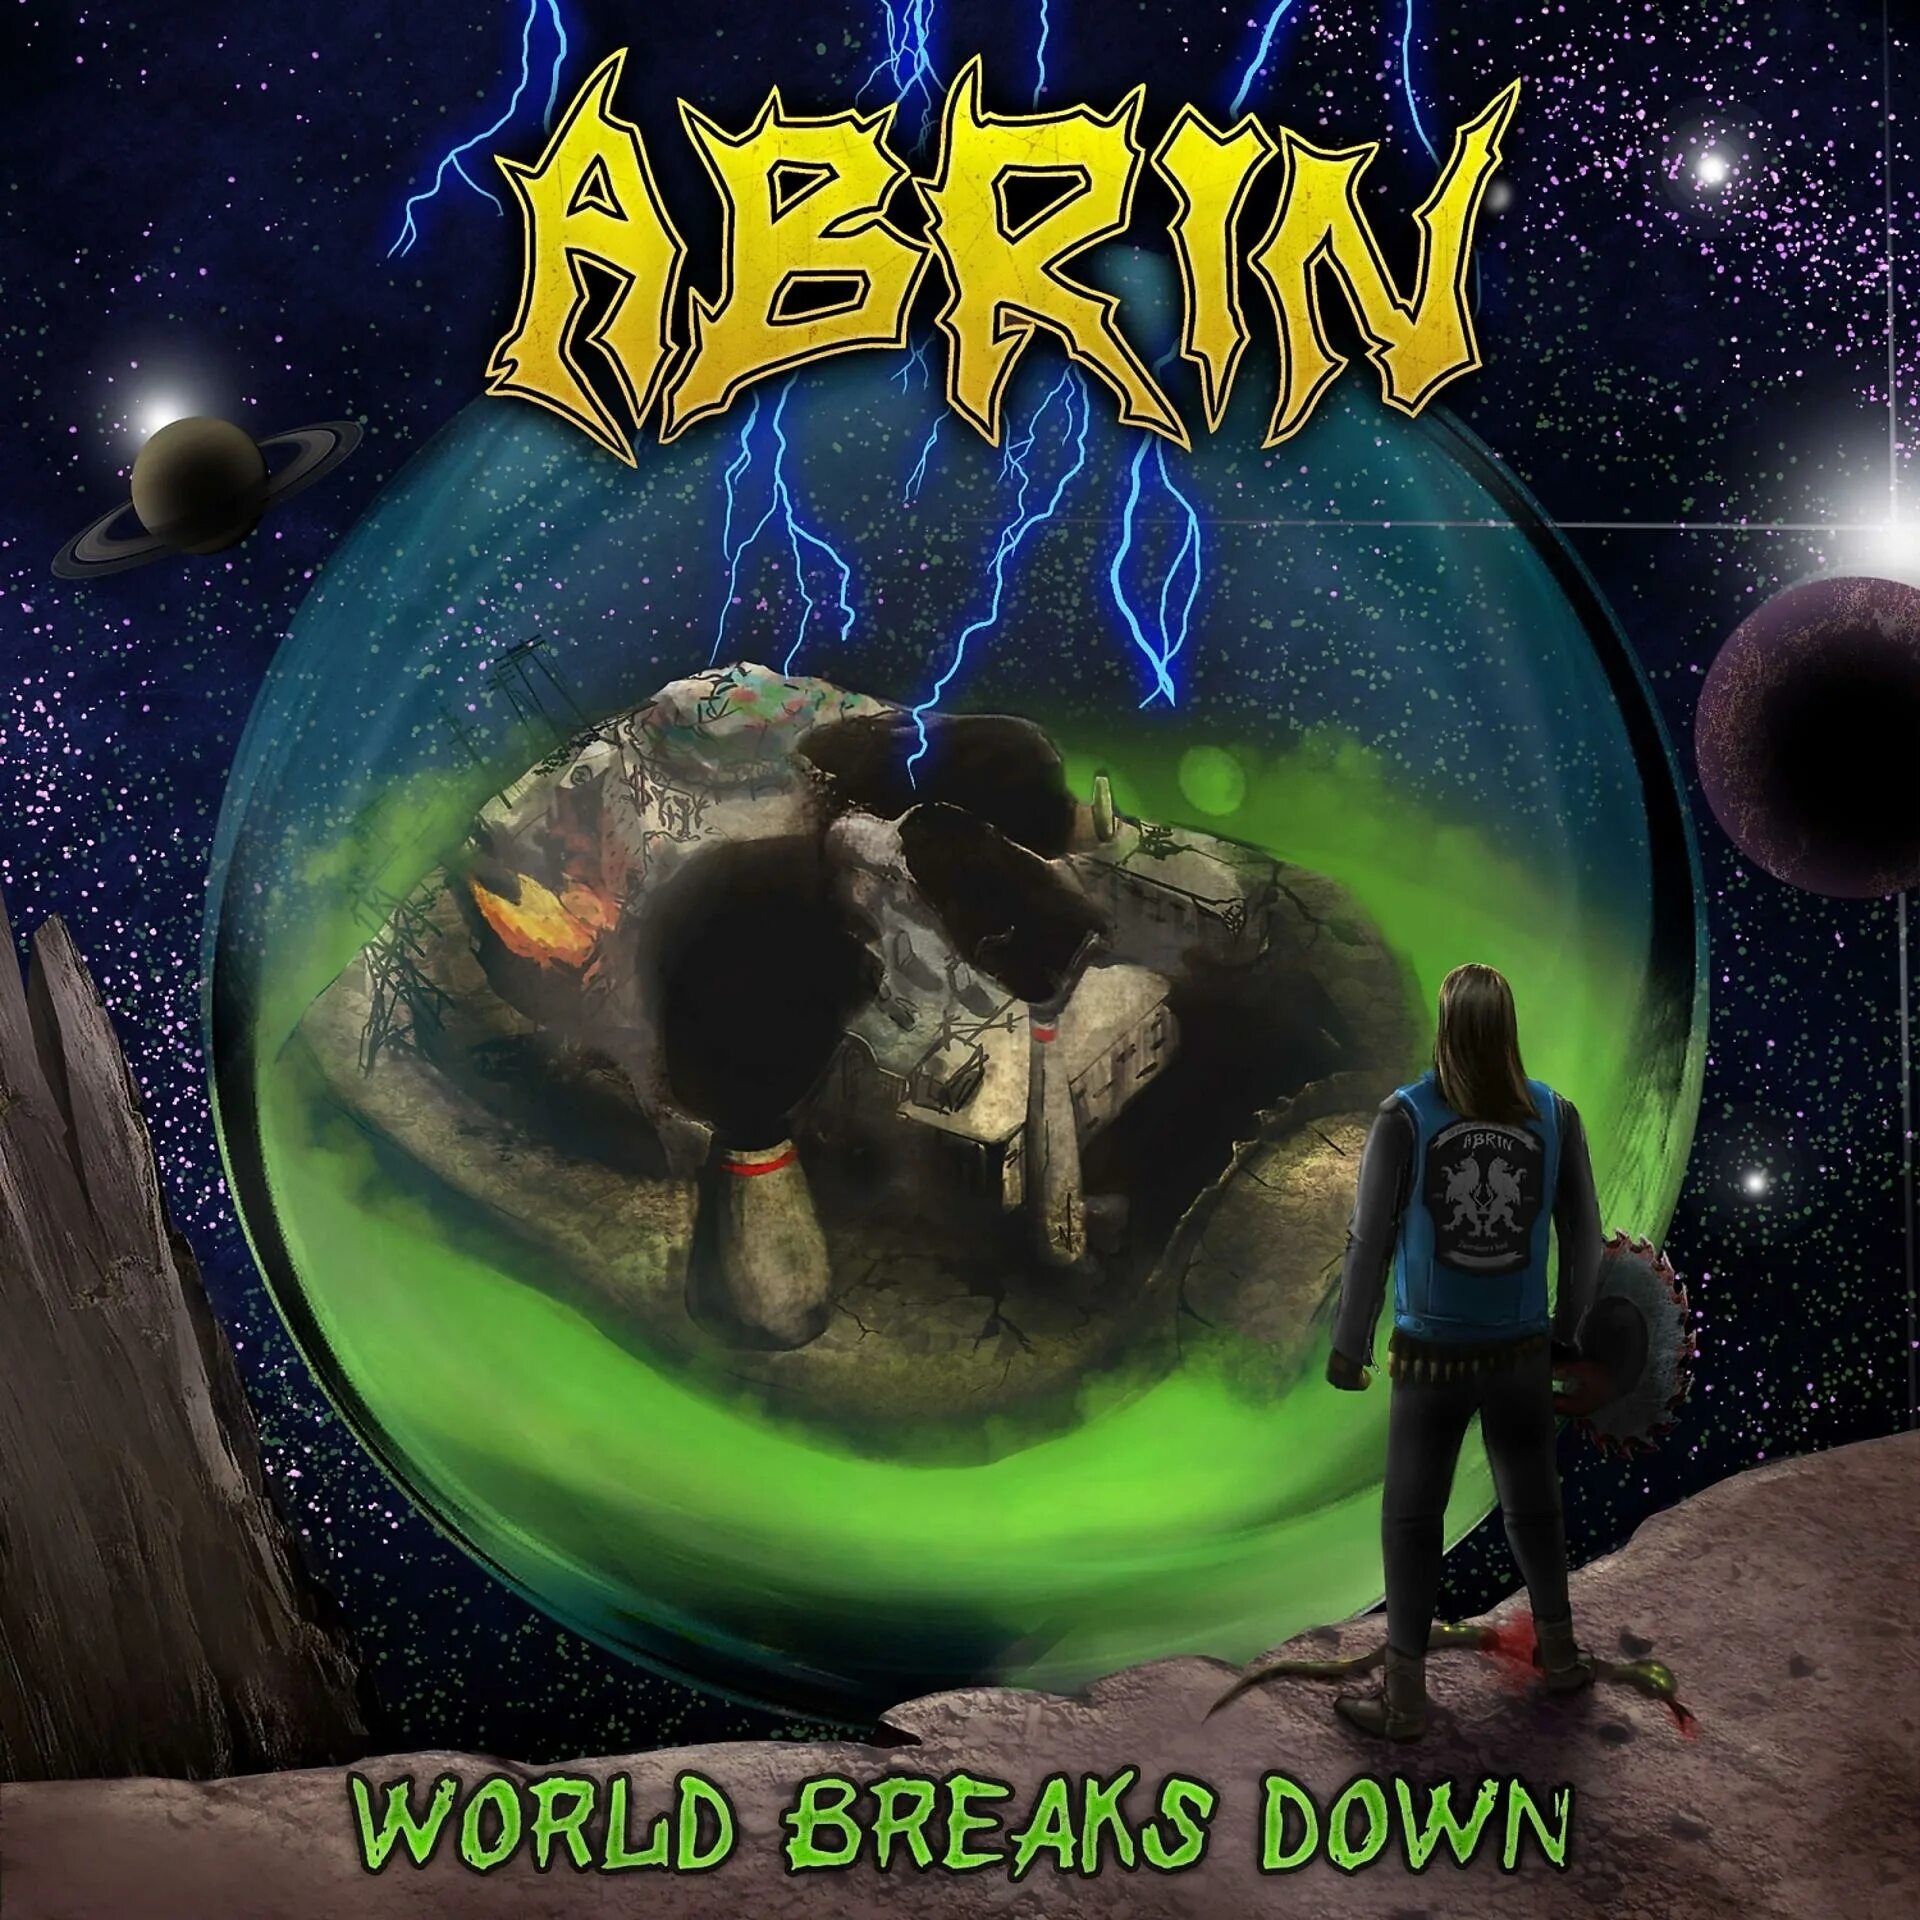 World is broken. Abrin группа. Abrin группа 2021. Abrin "мир зла". Абрин Челябинск.